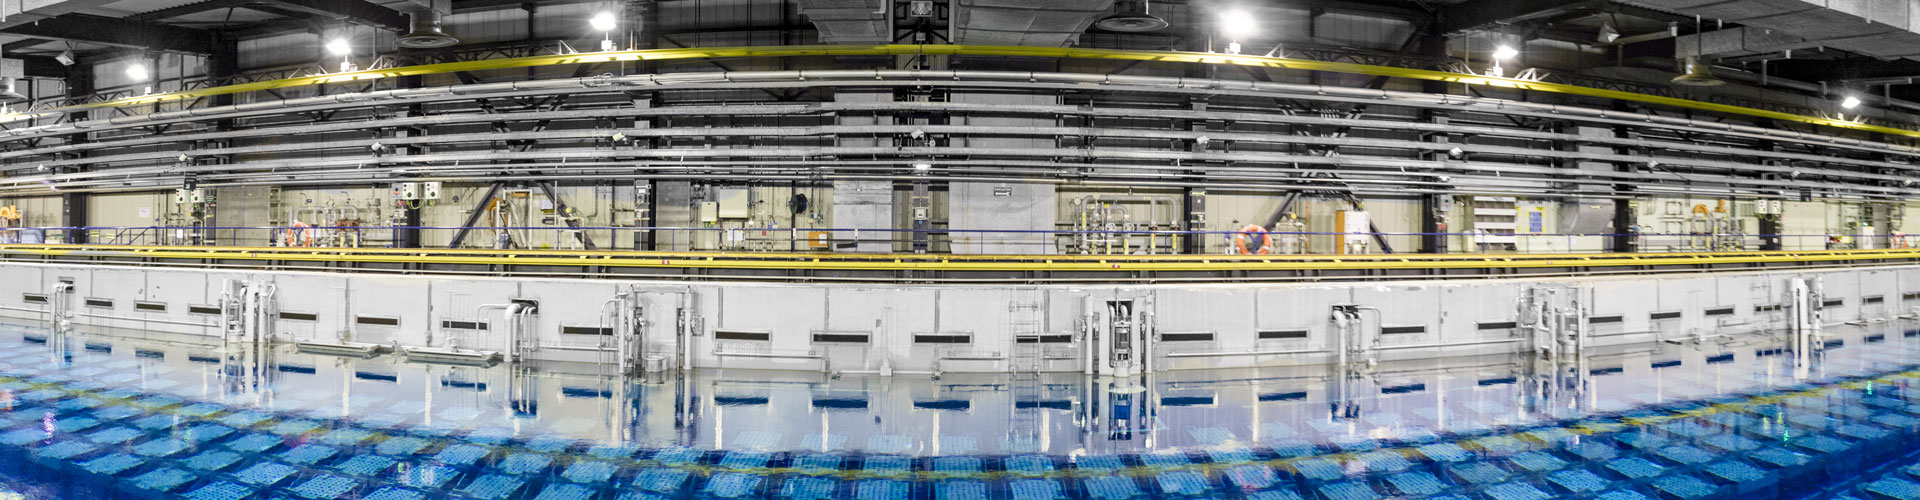 Used nuclear fuel interim storage pool, Orano la Hague reprocessing plant, France